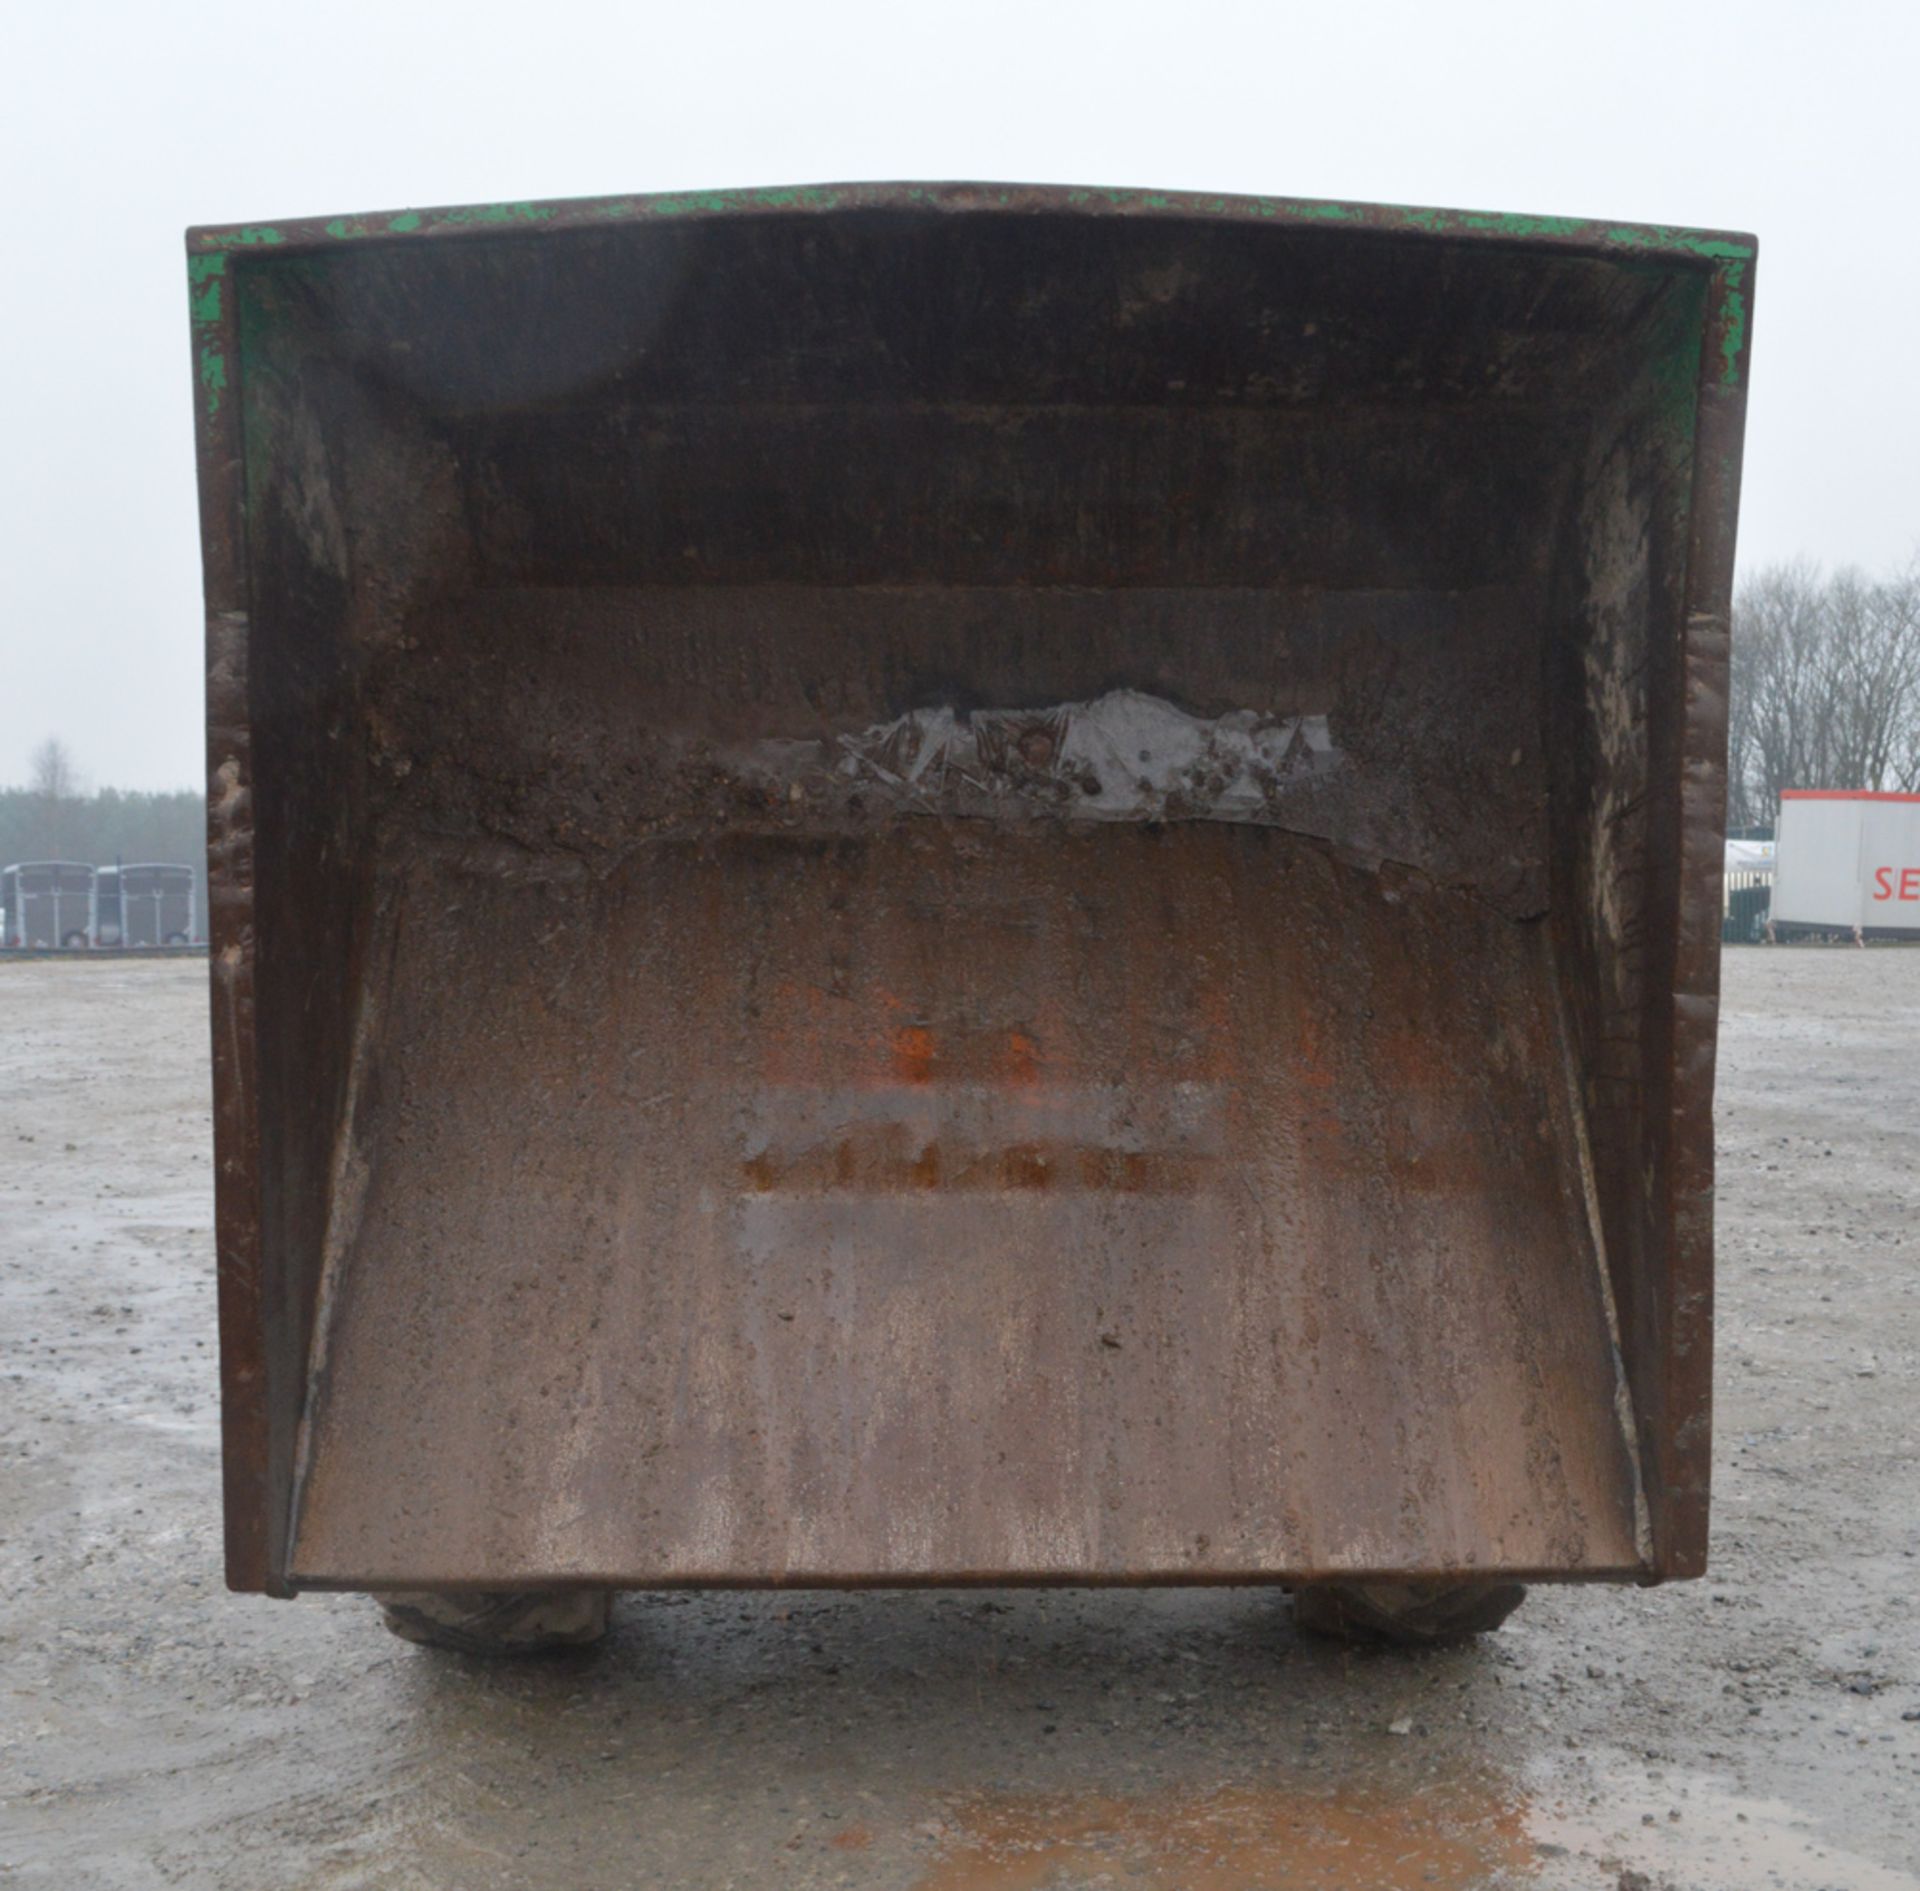 Benford Terex 6 tonne straight skip dumper Year: 2008 S/N: E803FW189 Recorded Hours: - Image 7 of 9